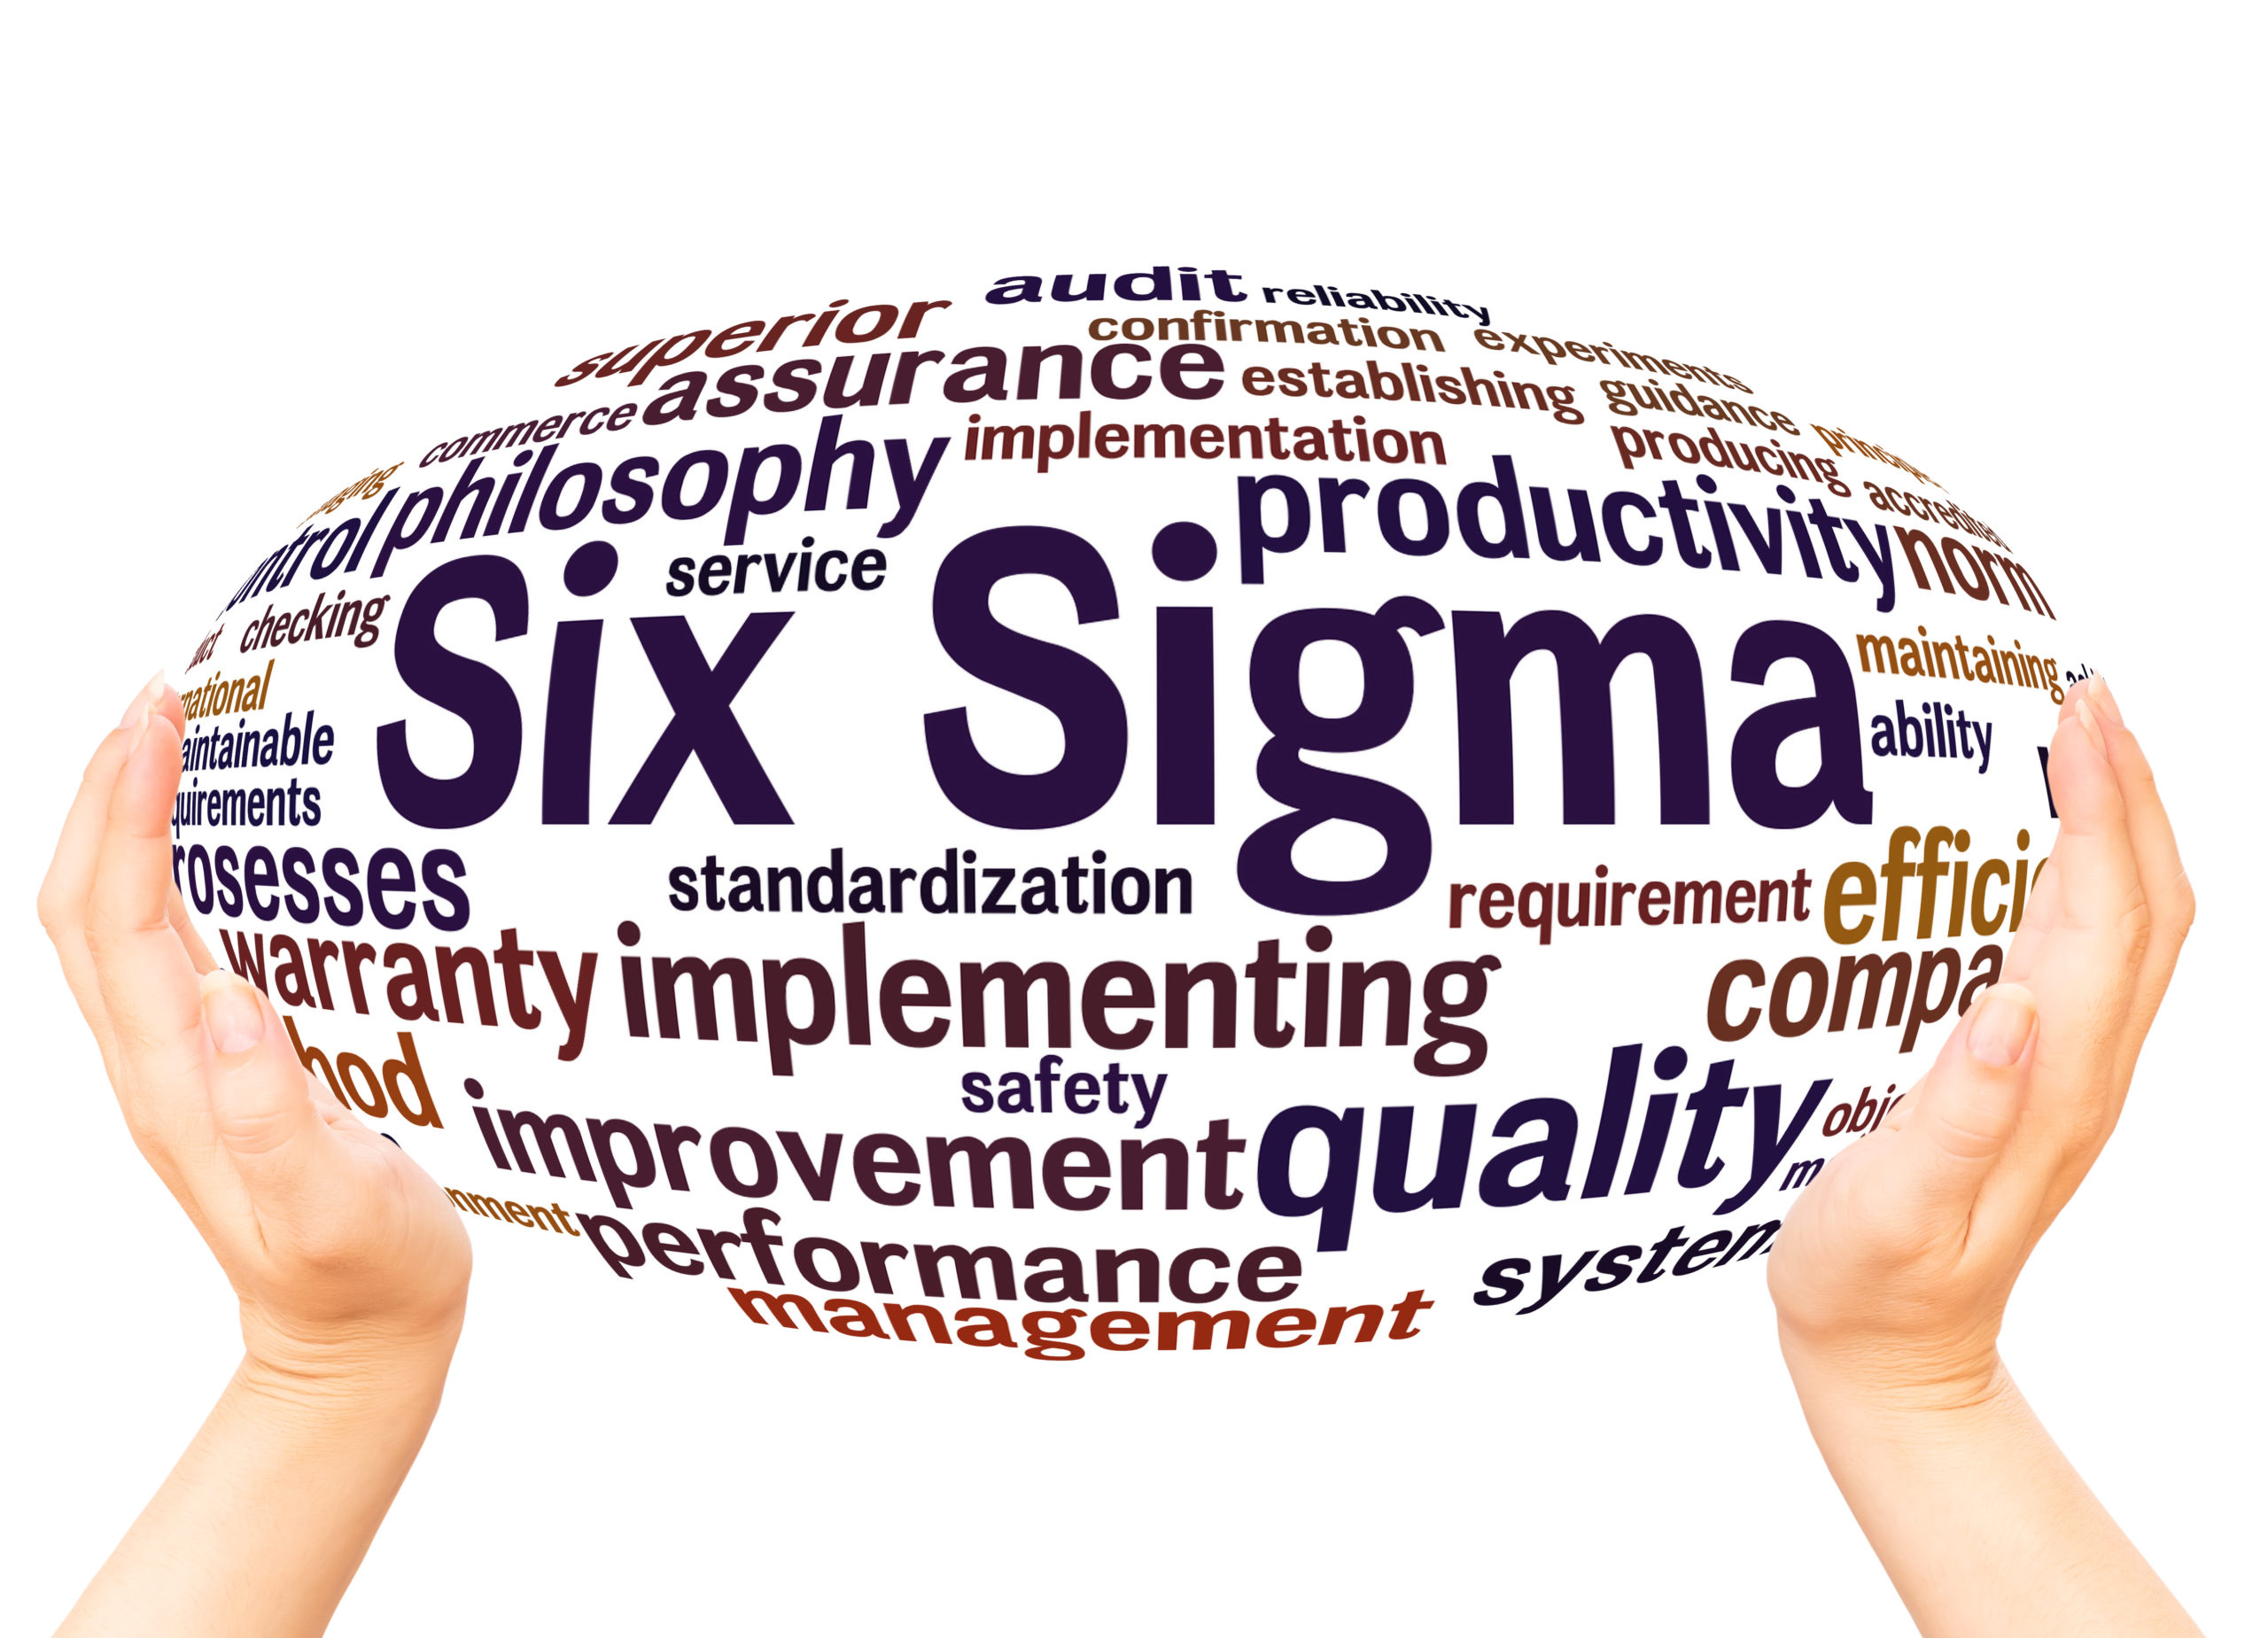 5 Lean Six Sigma Principles Every Organization Should Follow